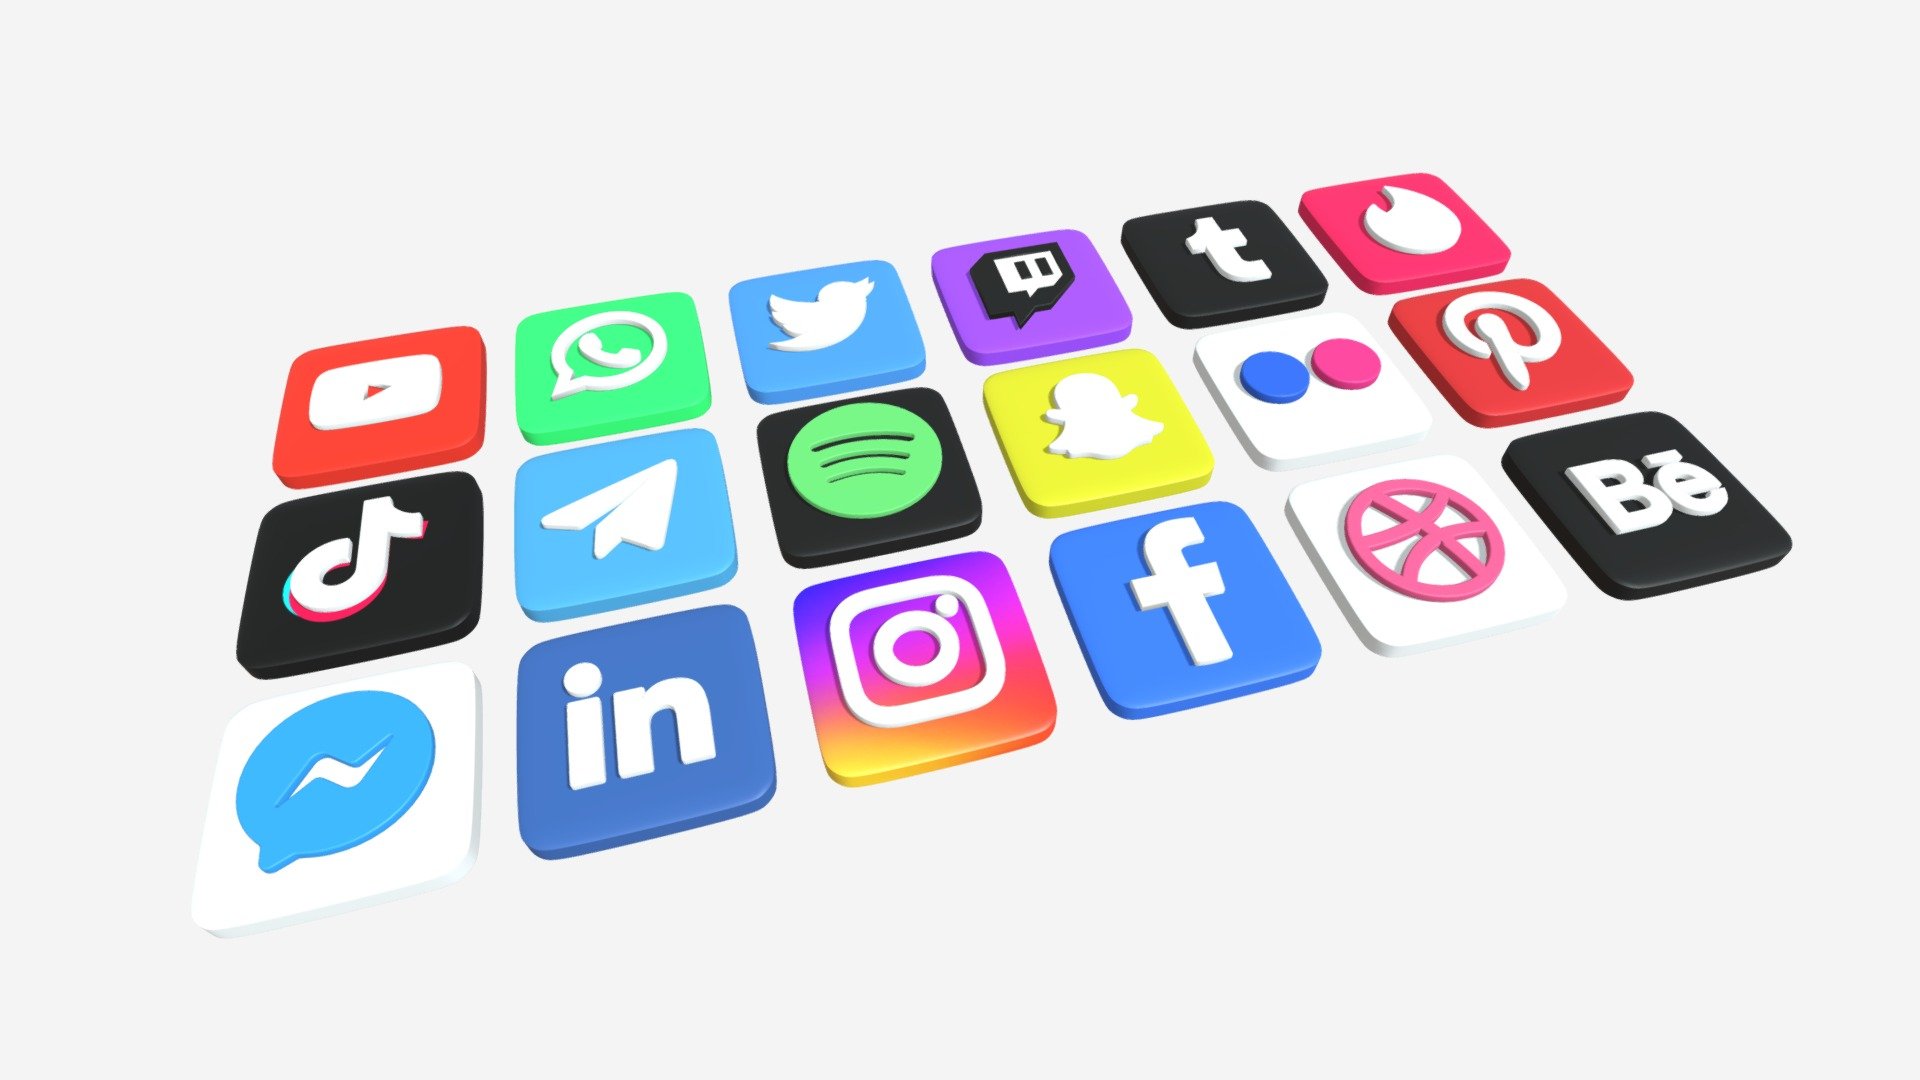 Here are the logos of several well-known social networks:
Youtube / WhatsApp / Twitter / Twitch / Tumblr / Tinder / TikTok / Telegram / Spotify / Snapchat / Flickr / Pinterest / Messenger / Linkdin / Instagram / Facebook / Dribble / Behance - Social Network Icons - 3D model by Larsinne 3d model